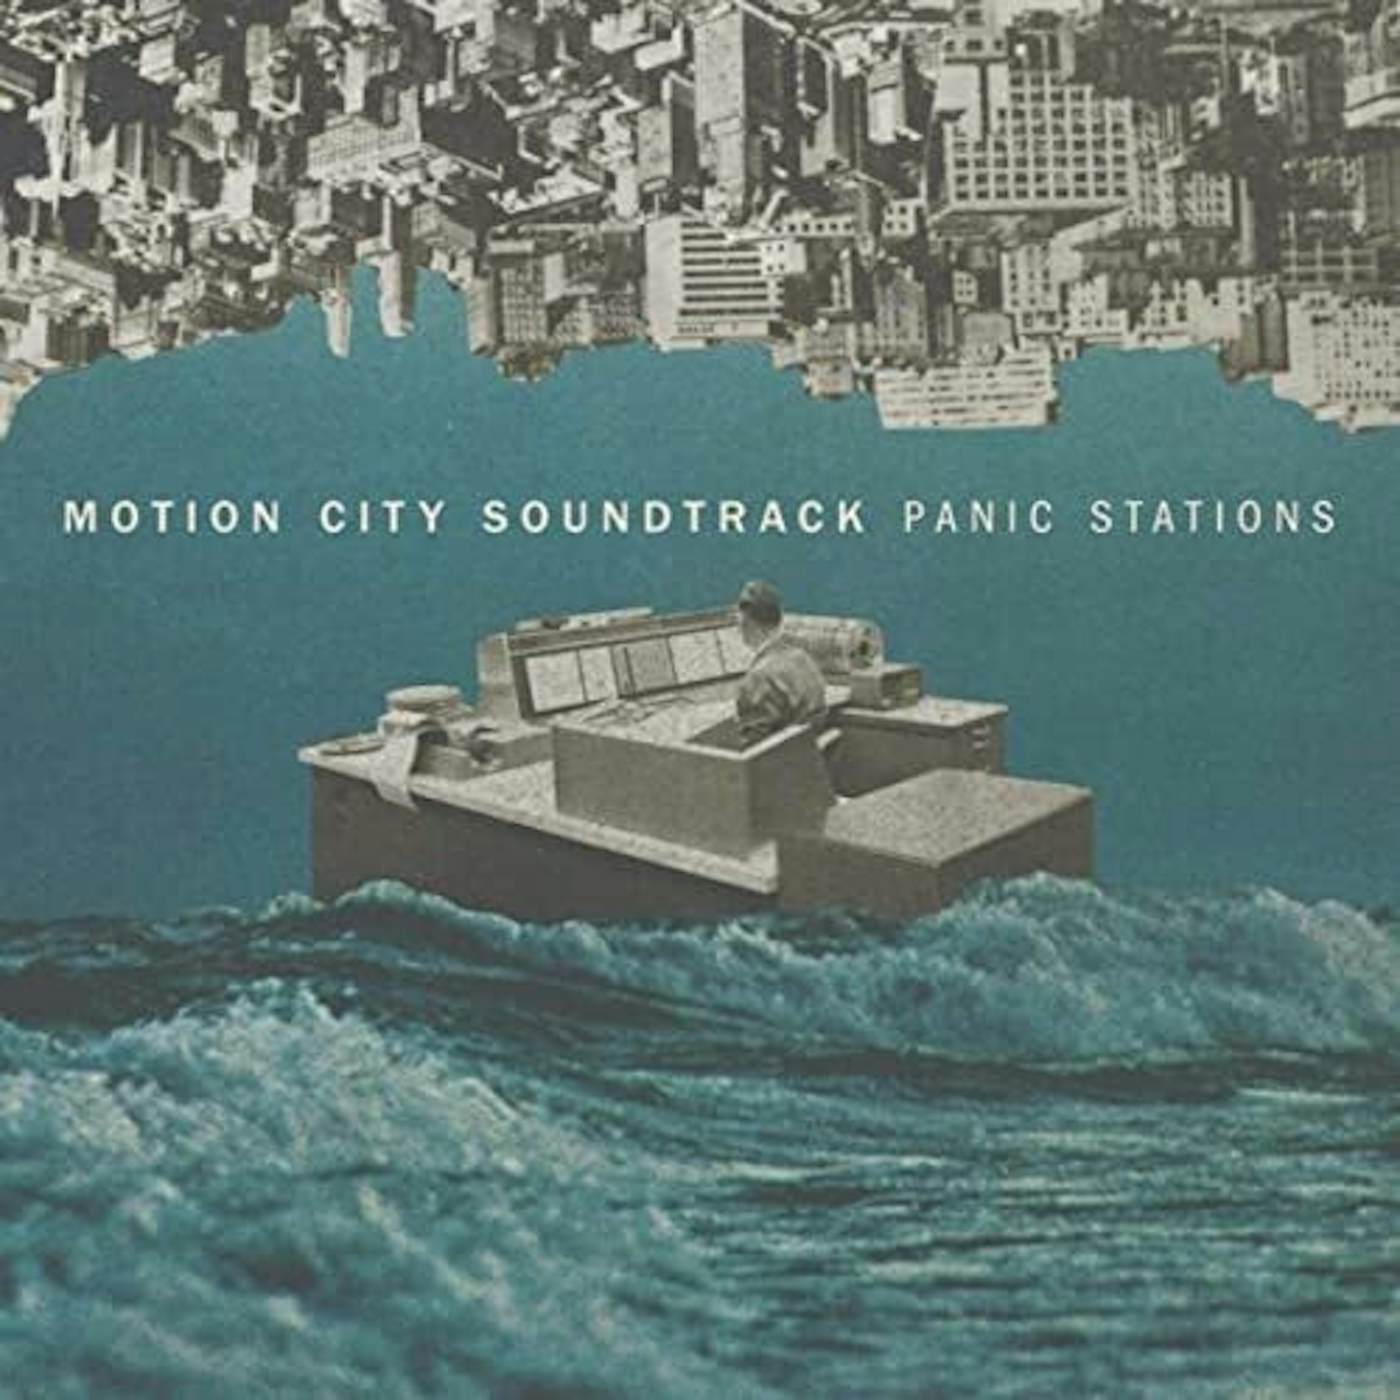 Motion City Soundtrack Panic Stations (Blue/White) Vinyl Record